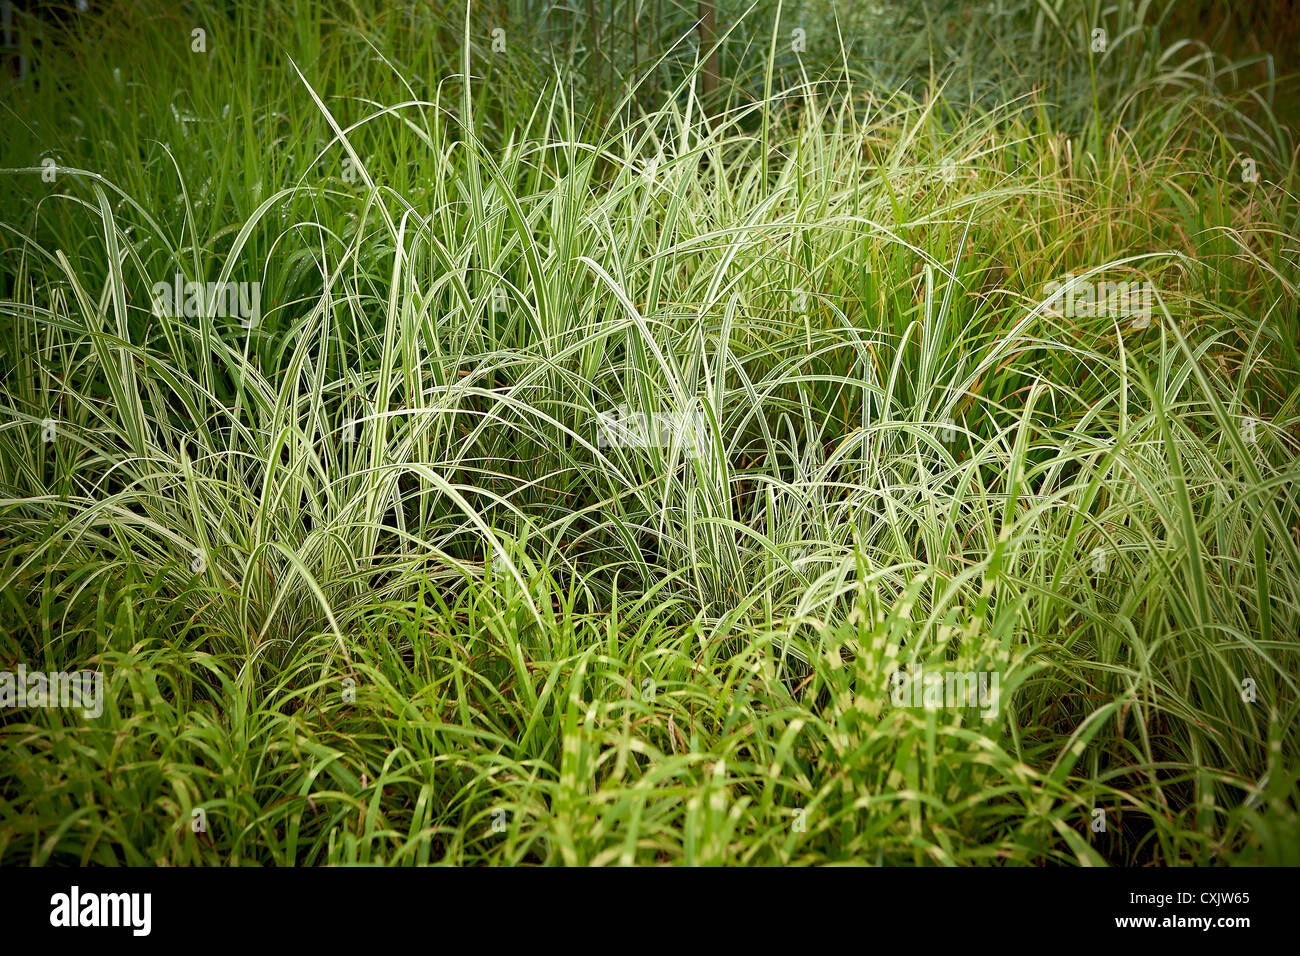 Nastro erba circondato da miscelati alte erbe, Toronto Giardino Botanico, Toronto. Ontario, Canada Foto Stock